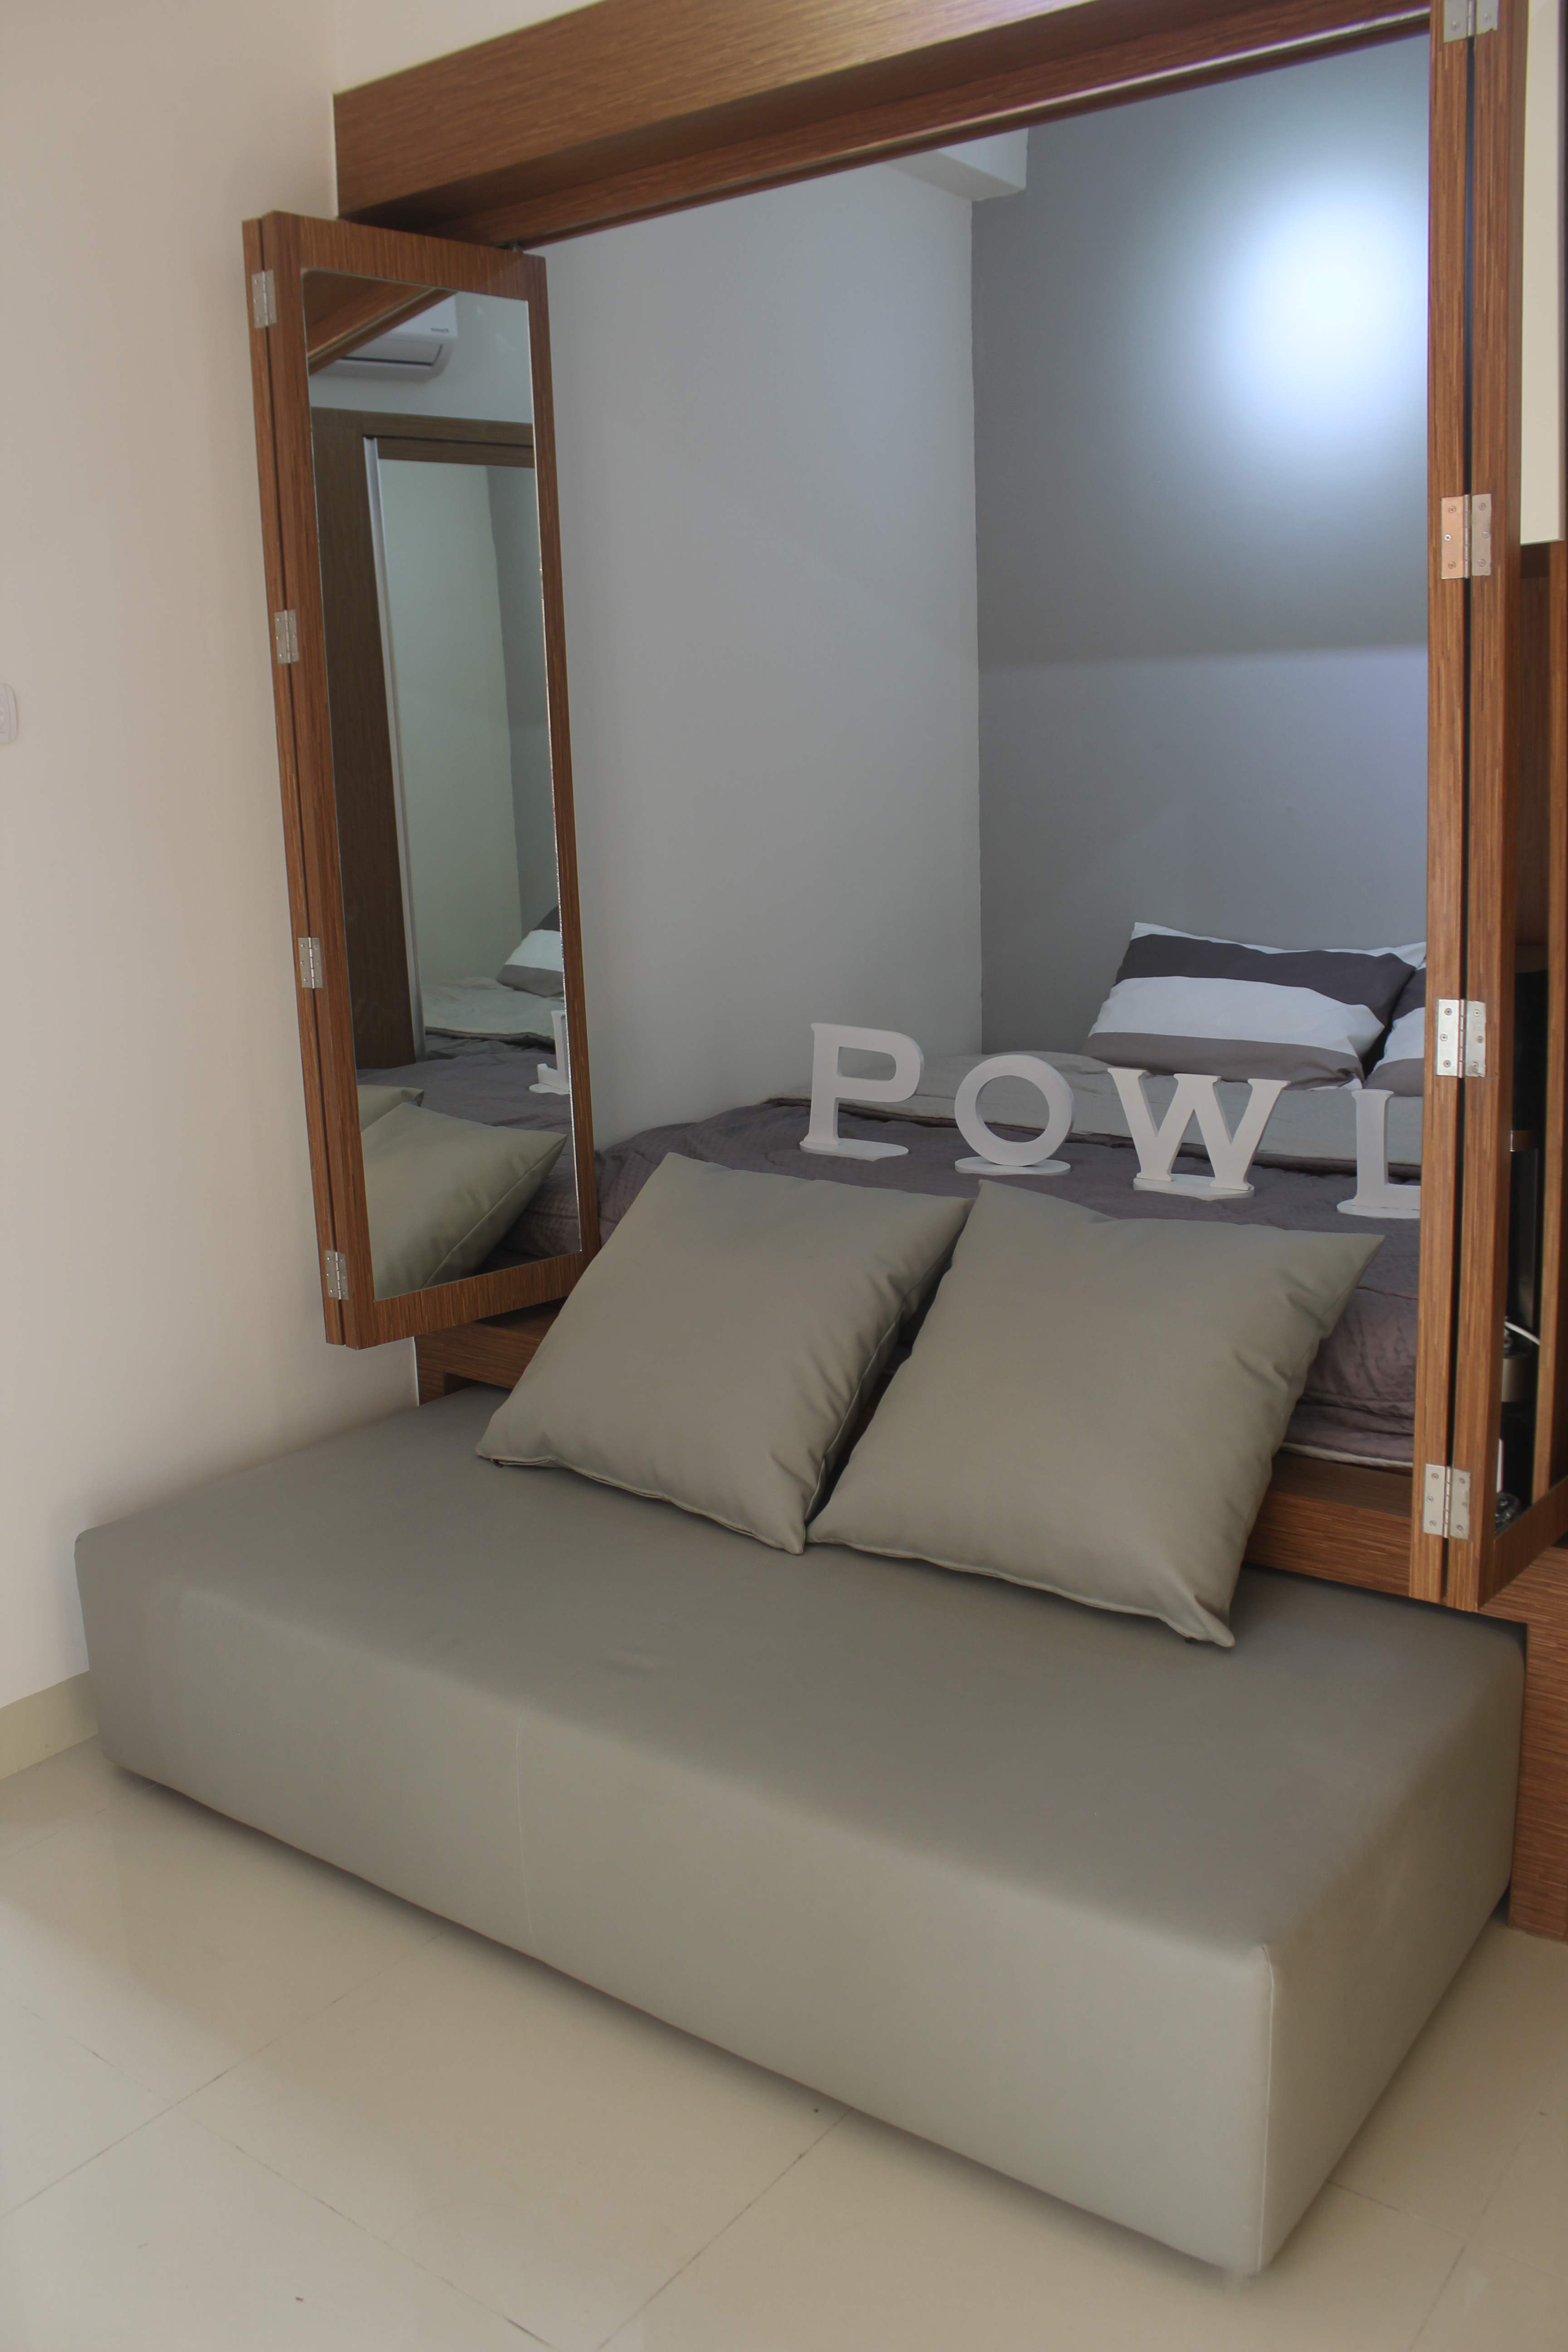 Desain Interior Apartemen 2 Kamar Tidur Powl Studio Toko